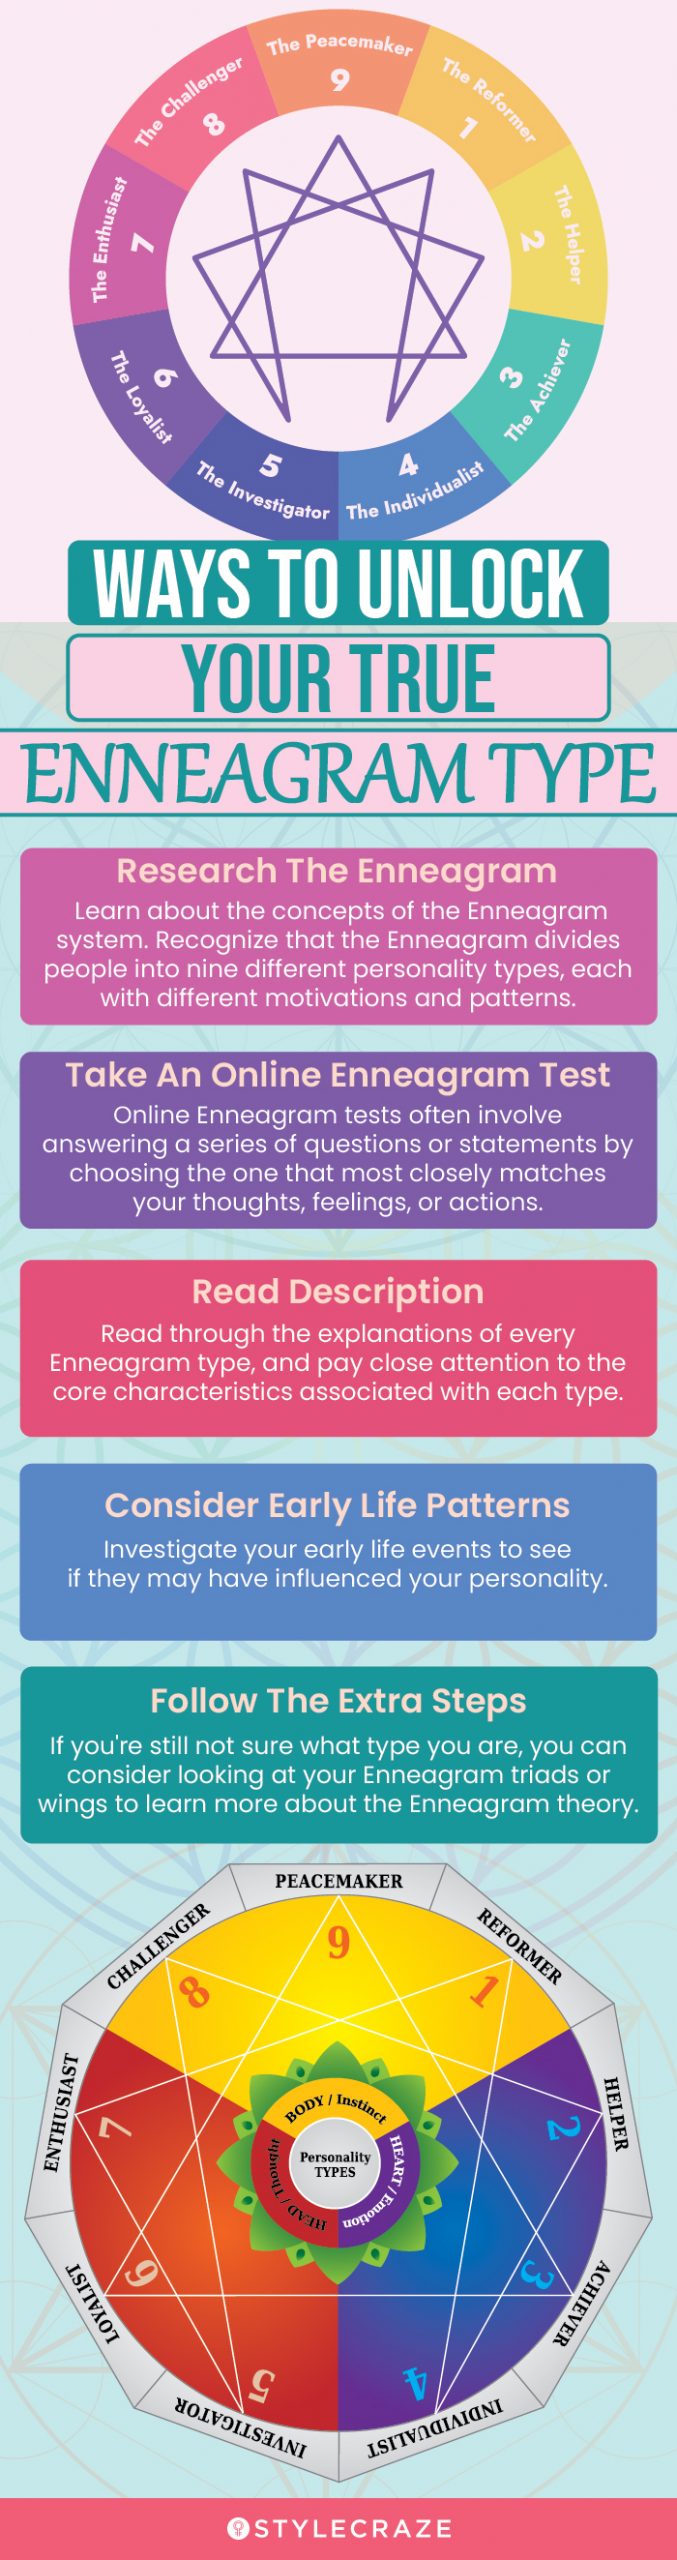 ways to unlock your true enneagram type (infographic)